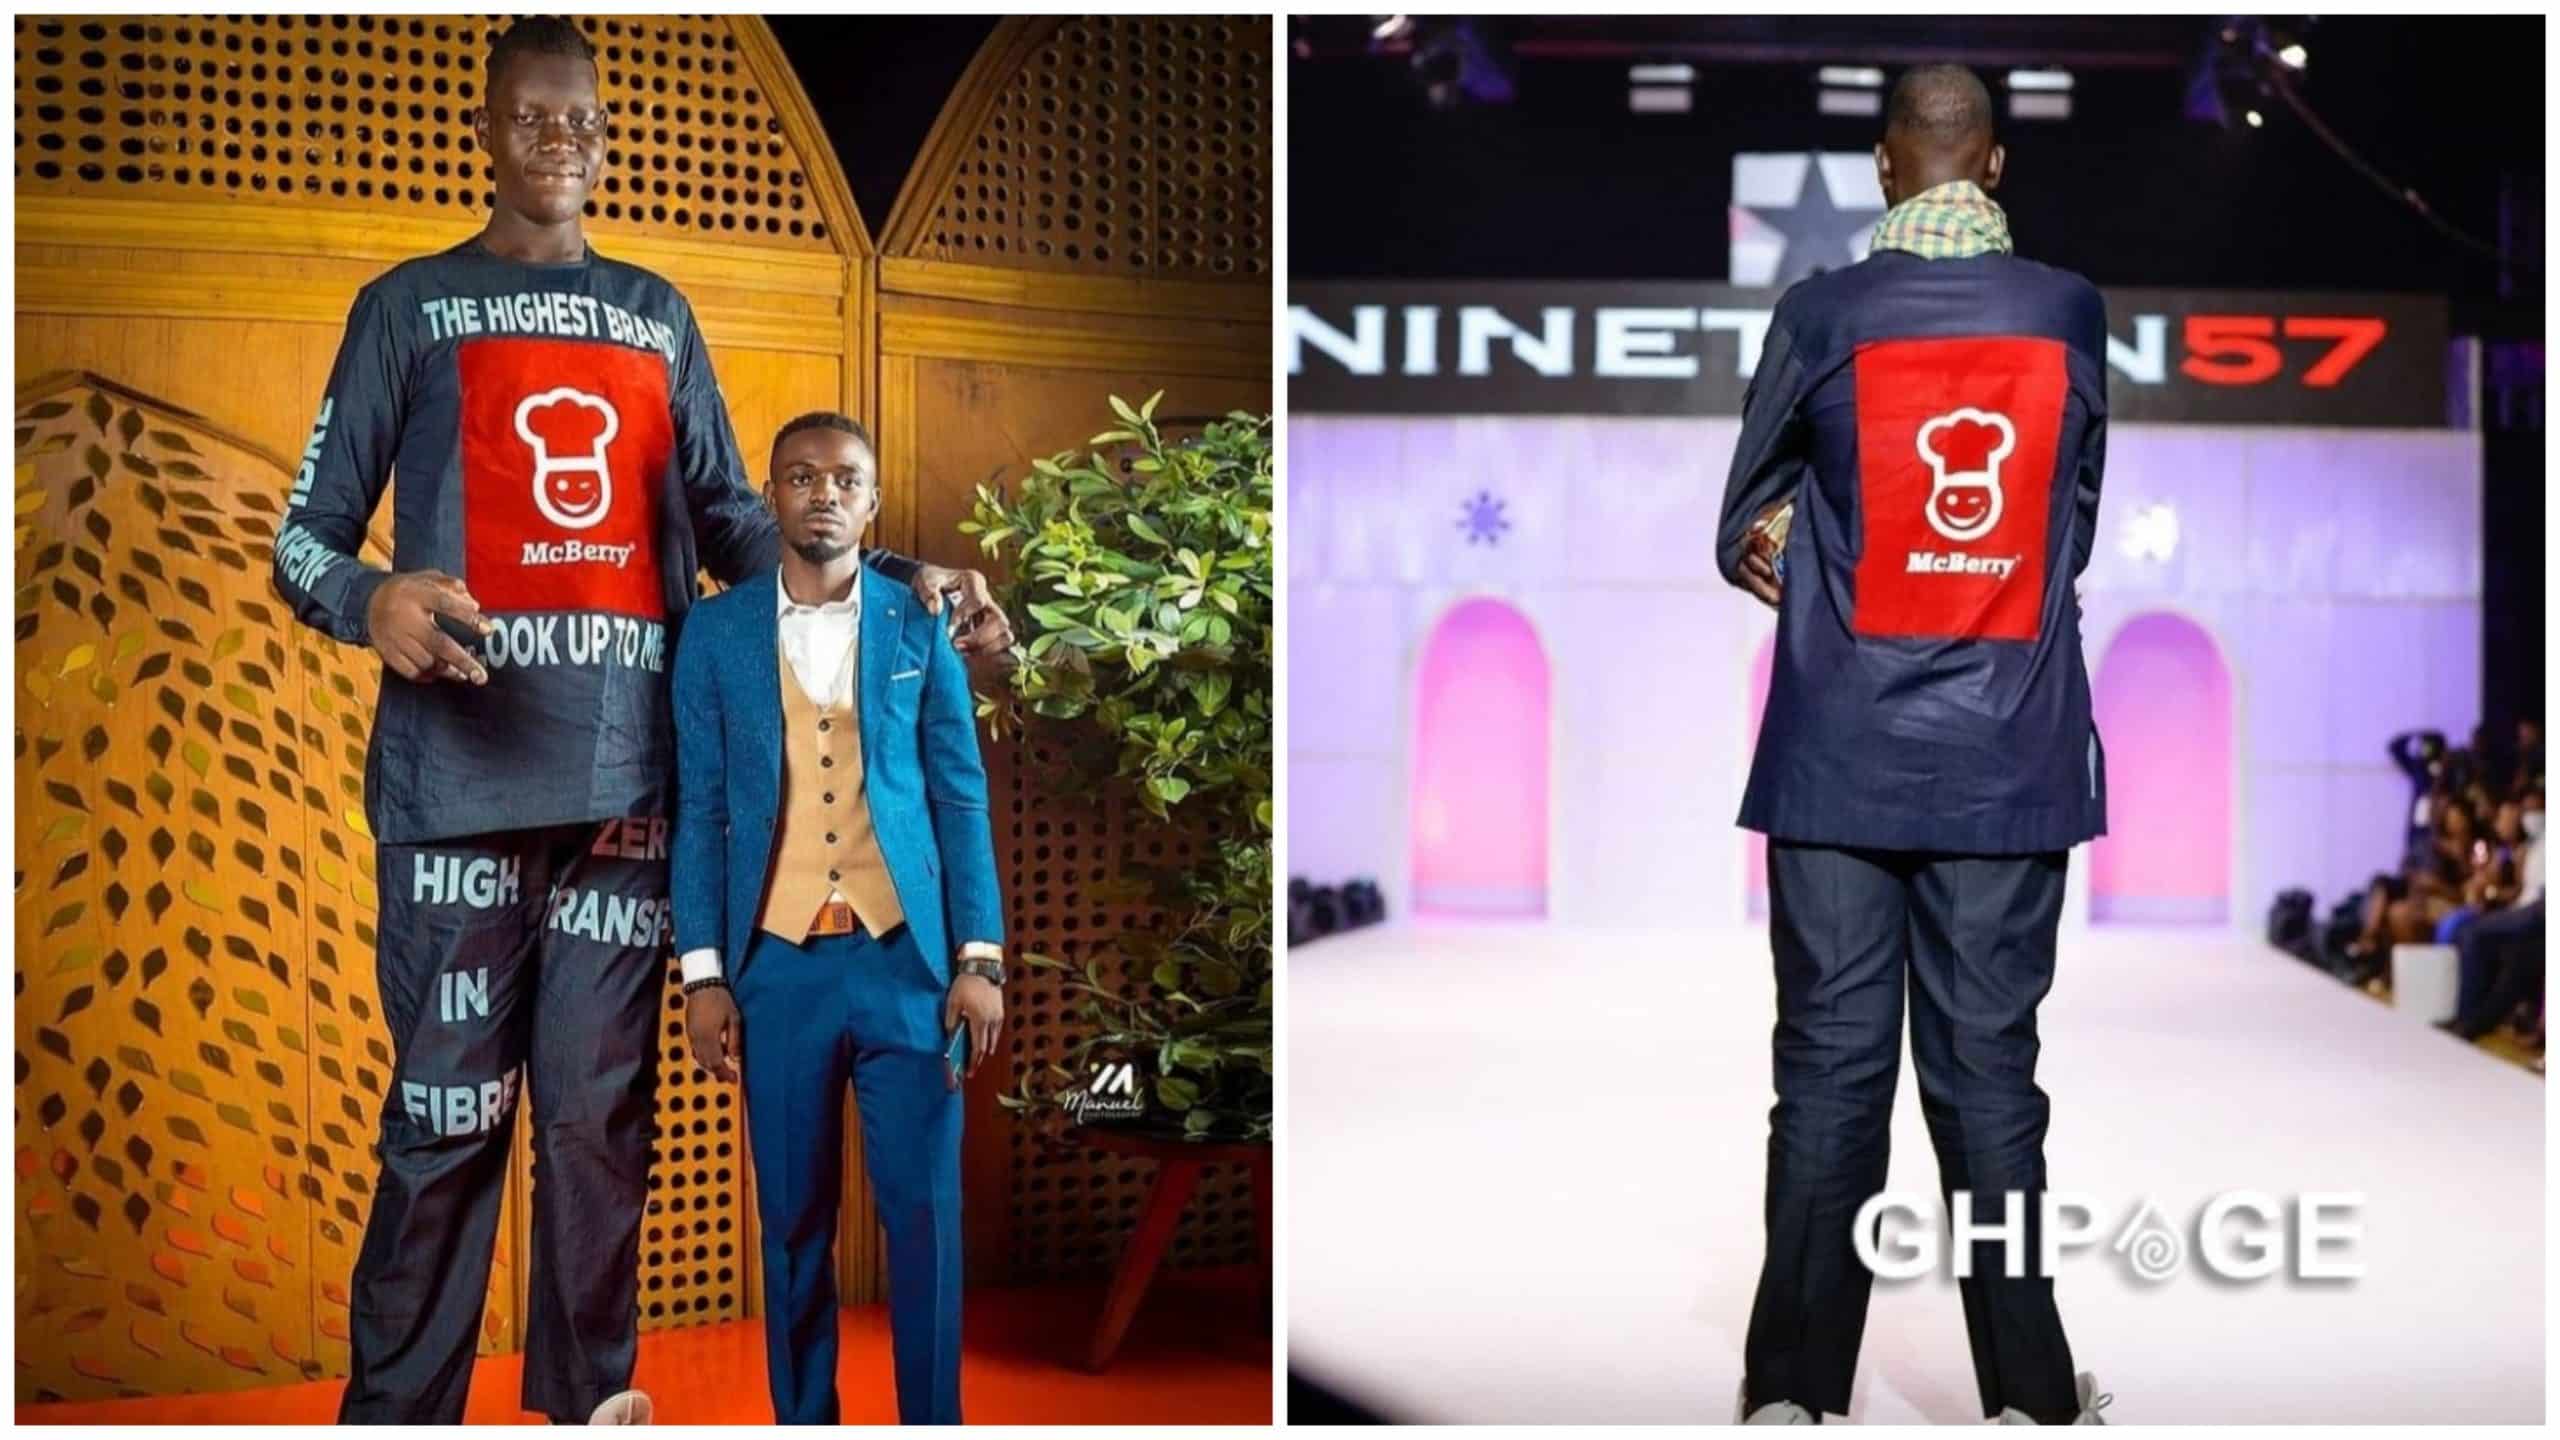 Meet Ghana S Tallest Man Who Is Like Goliath In The Bible Photos Ghanamma Com